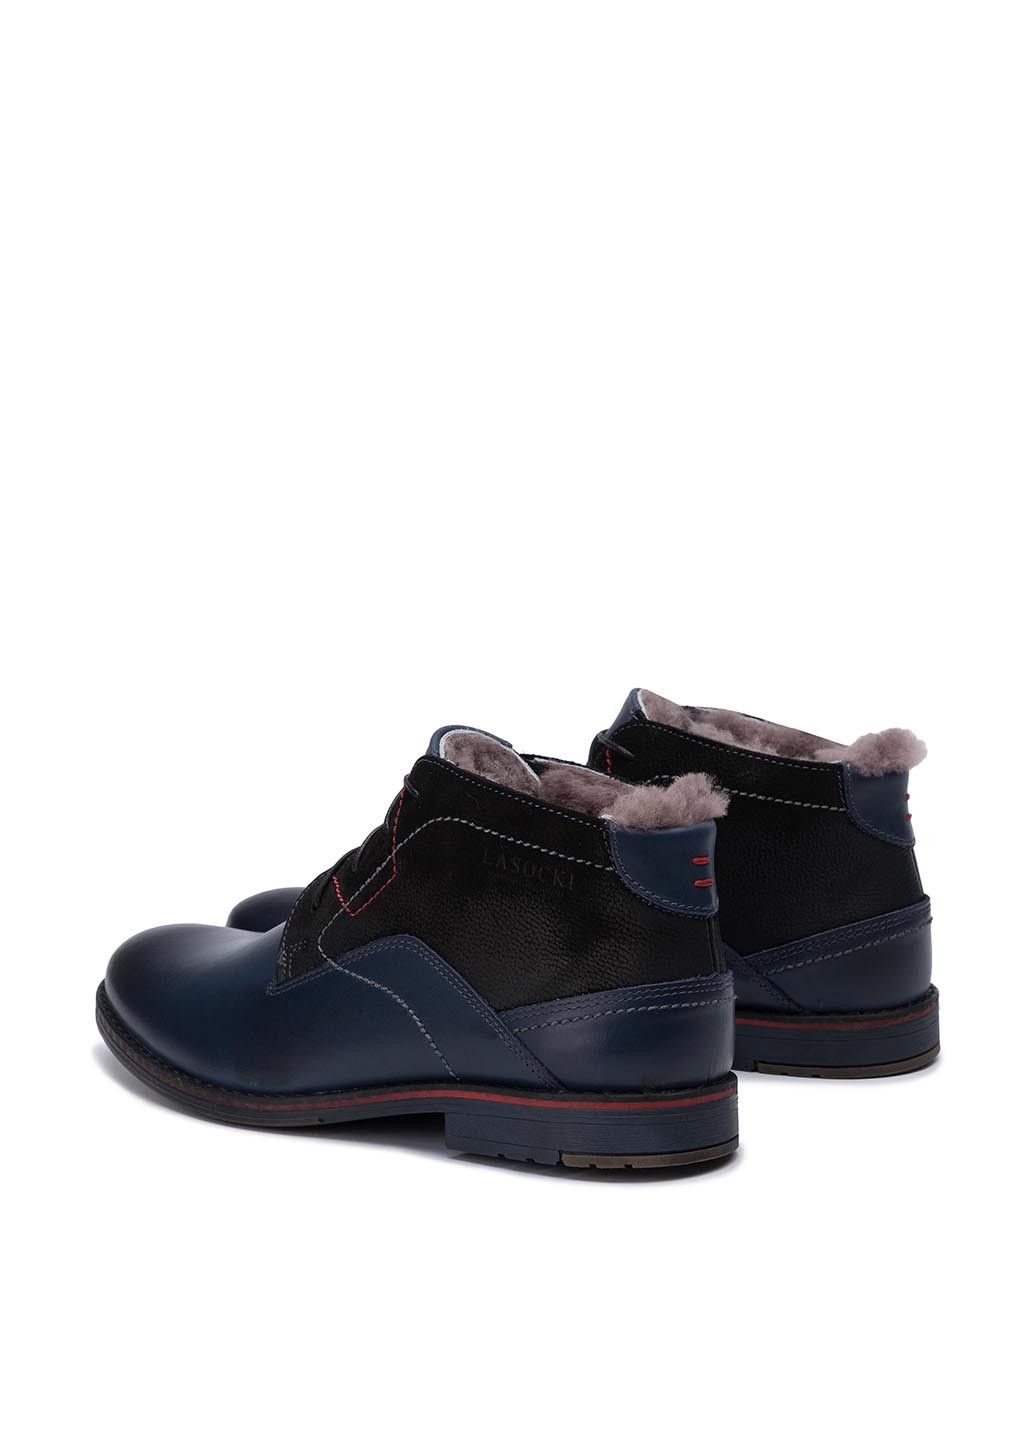 Темно-синие зимние черевики for men sm-187 Lasocki